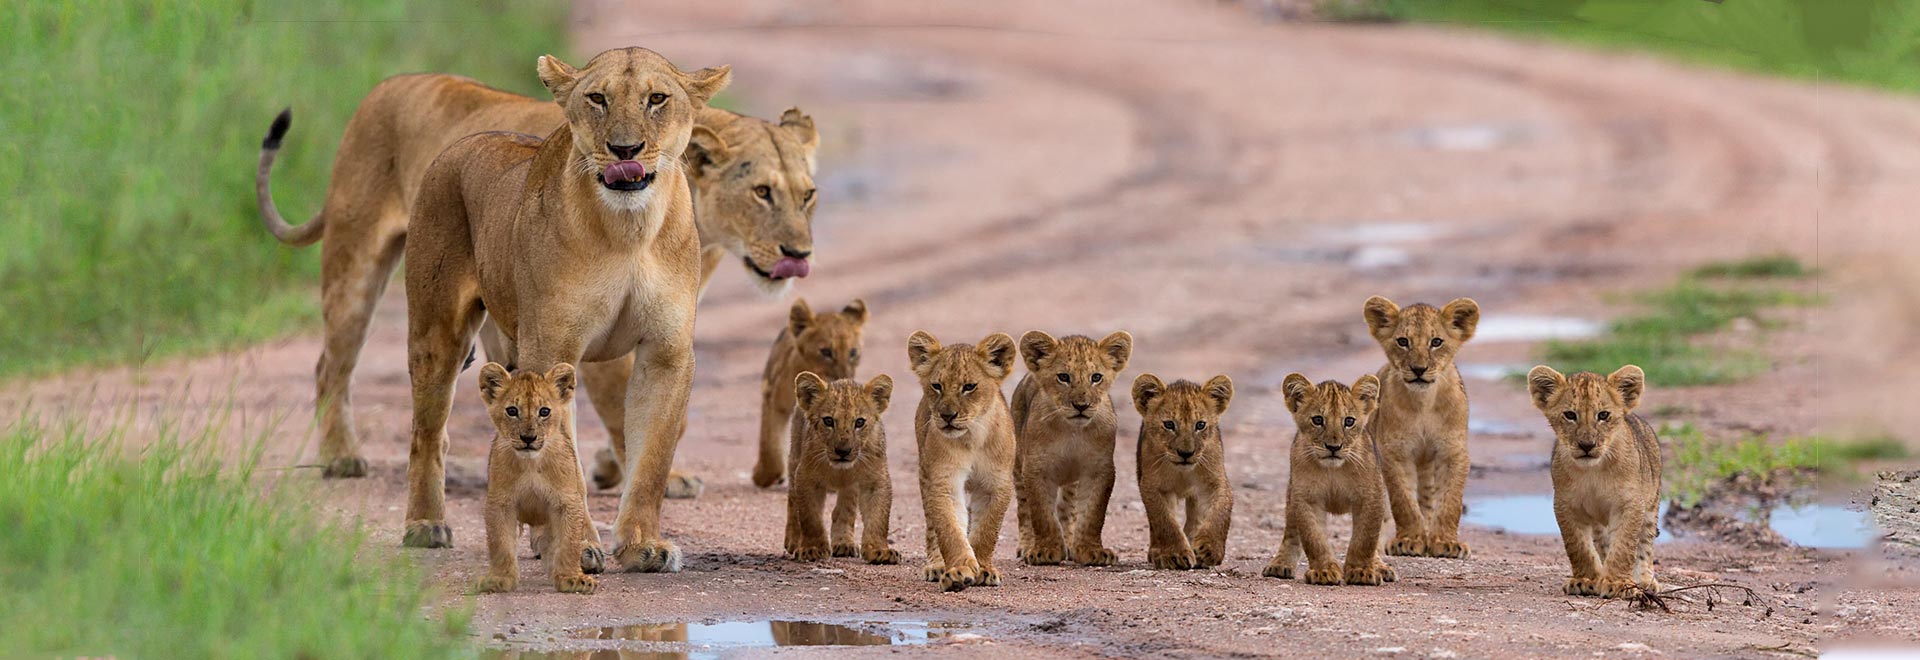 Africa Family Kenya Tanzania Lions MH